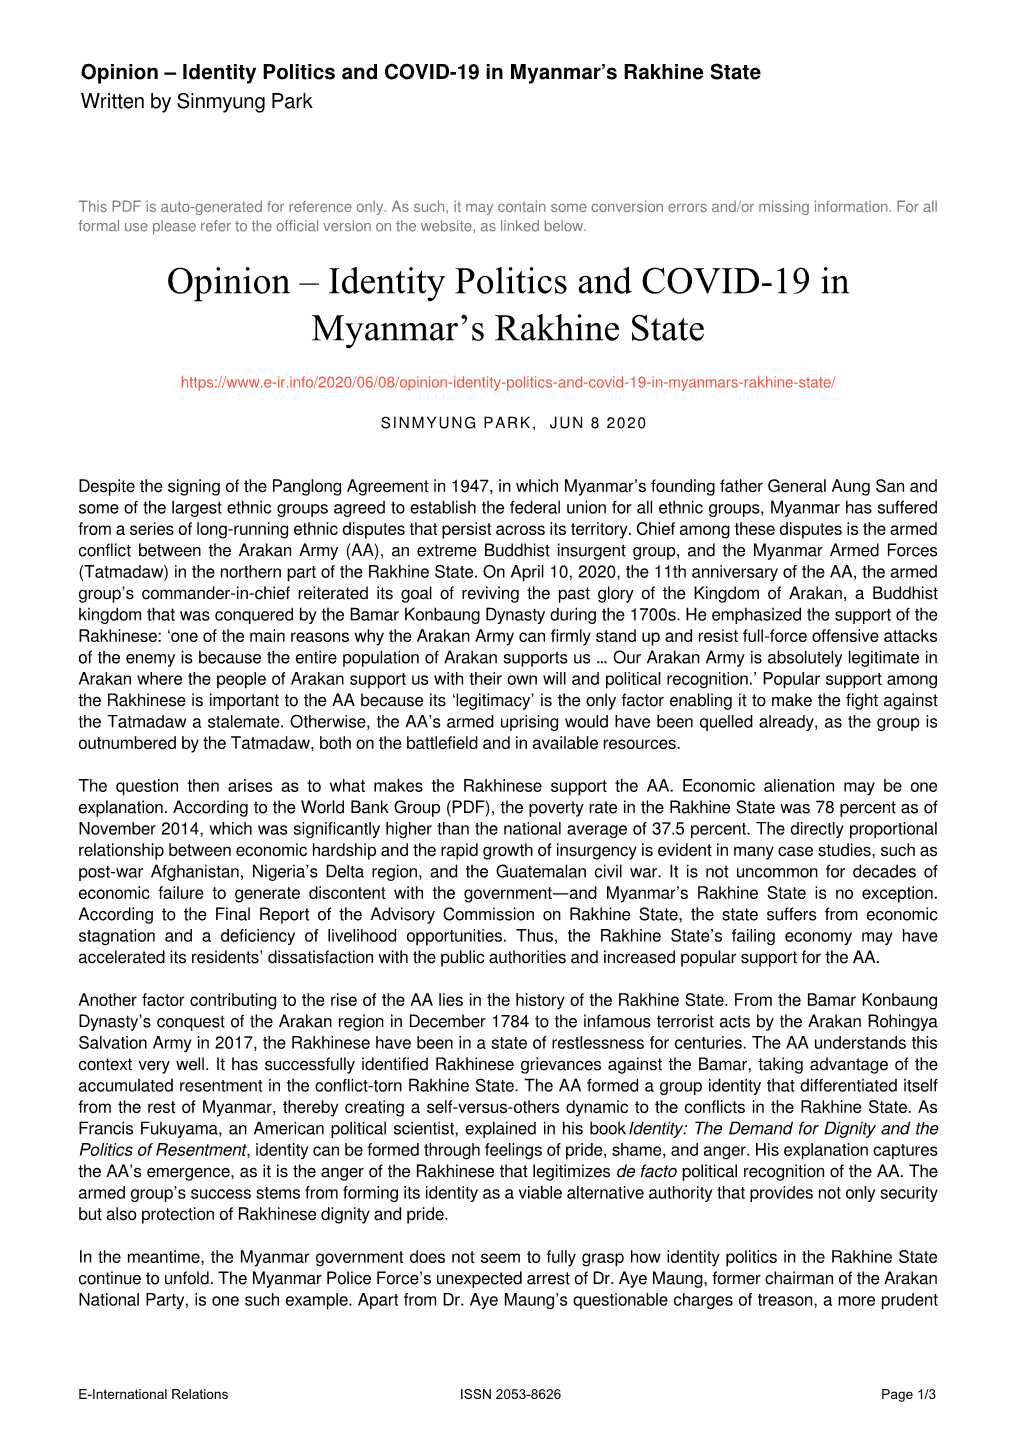 Identity Politics and COVID-19 in Myanmar's Rakhine State